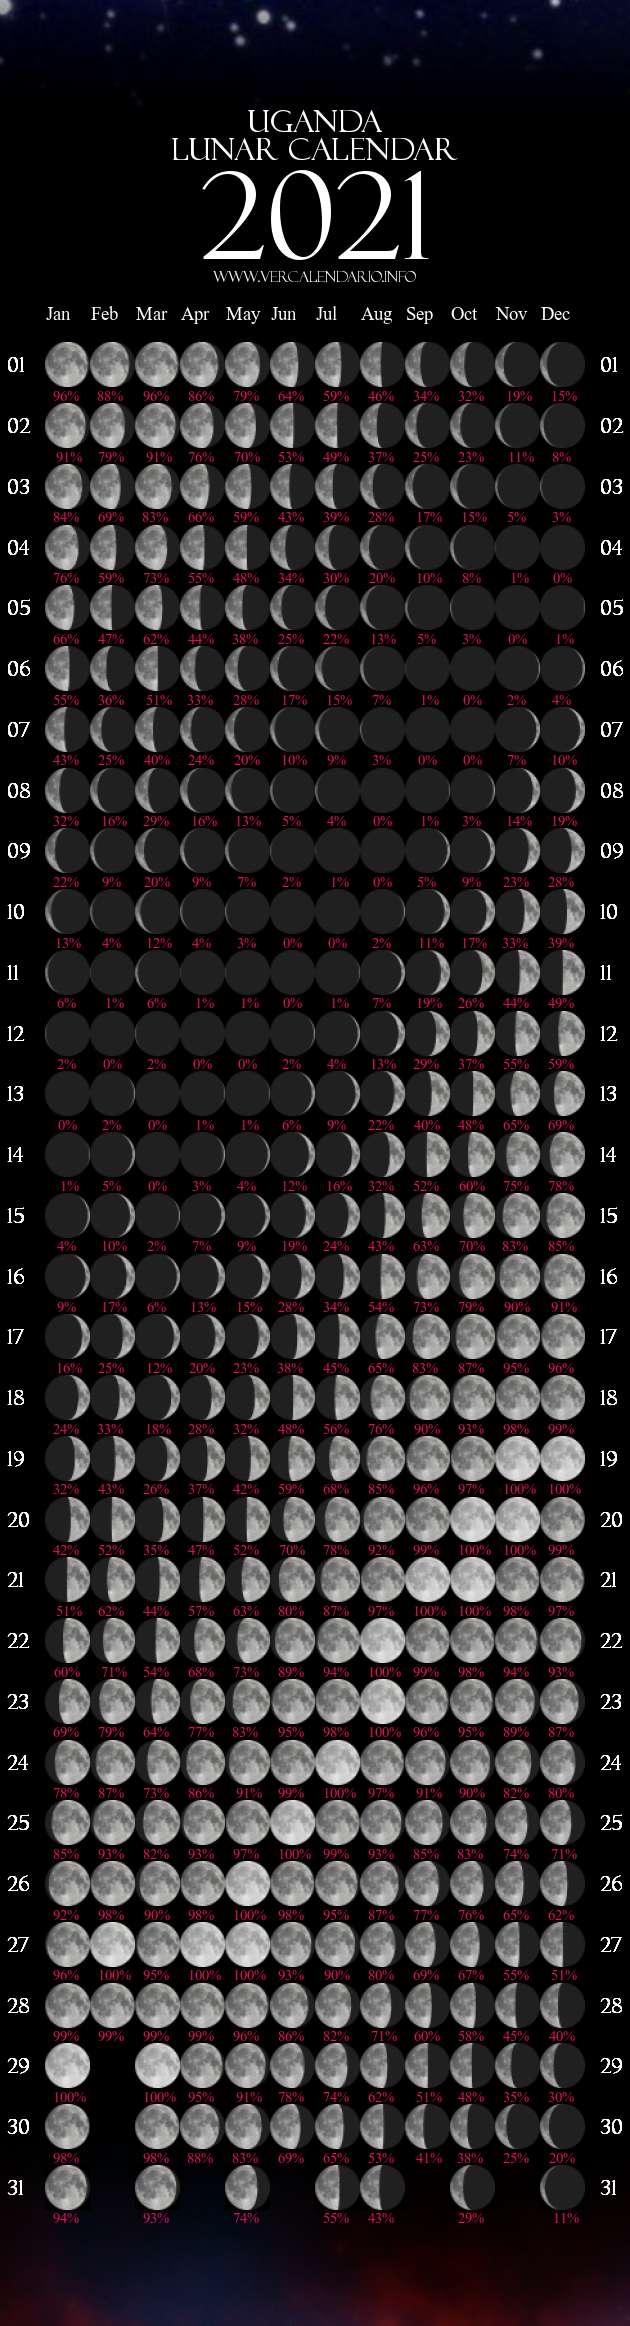 Lunar Calendar 2021 (Uganda)